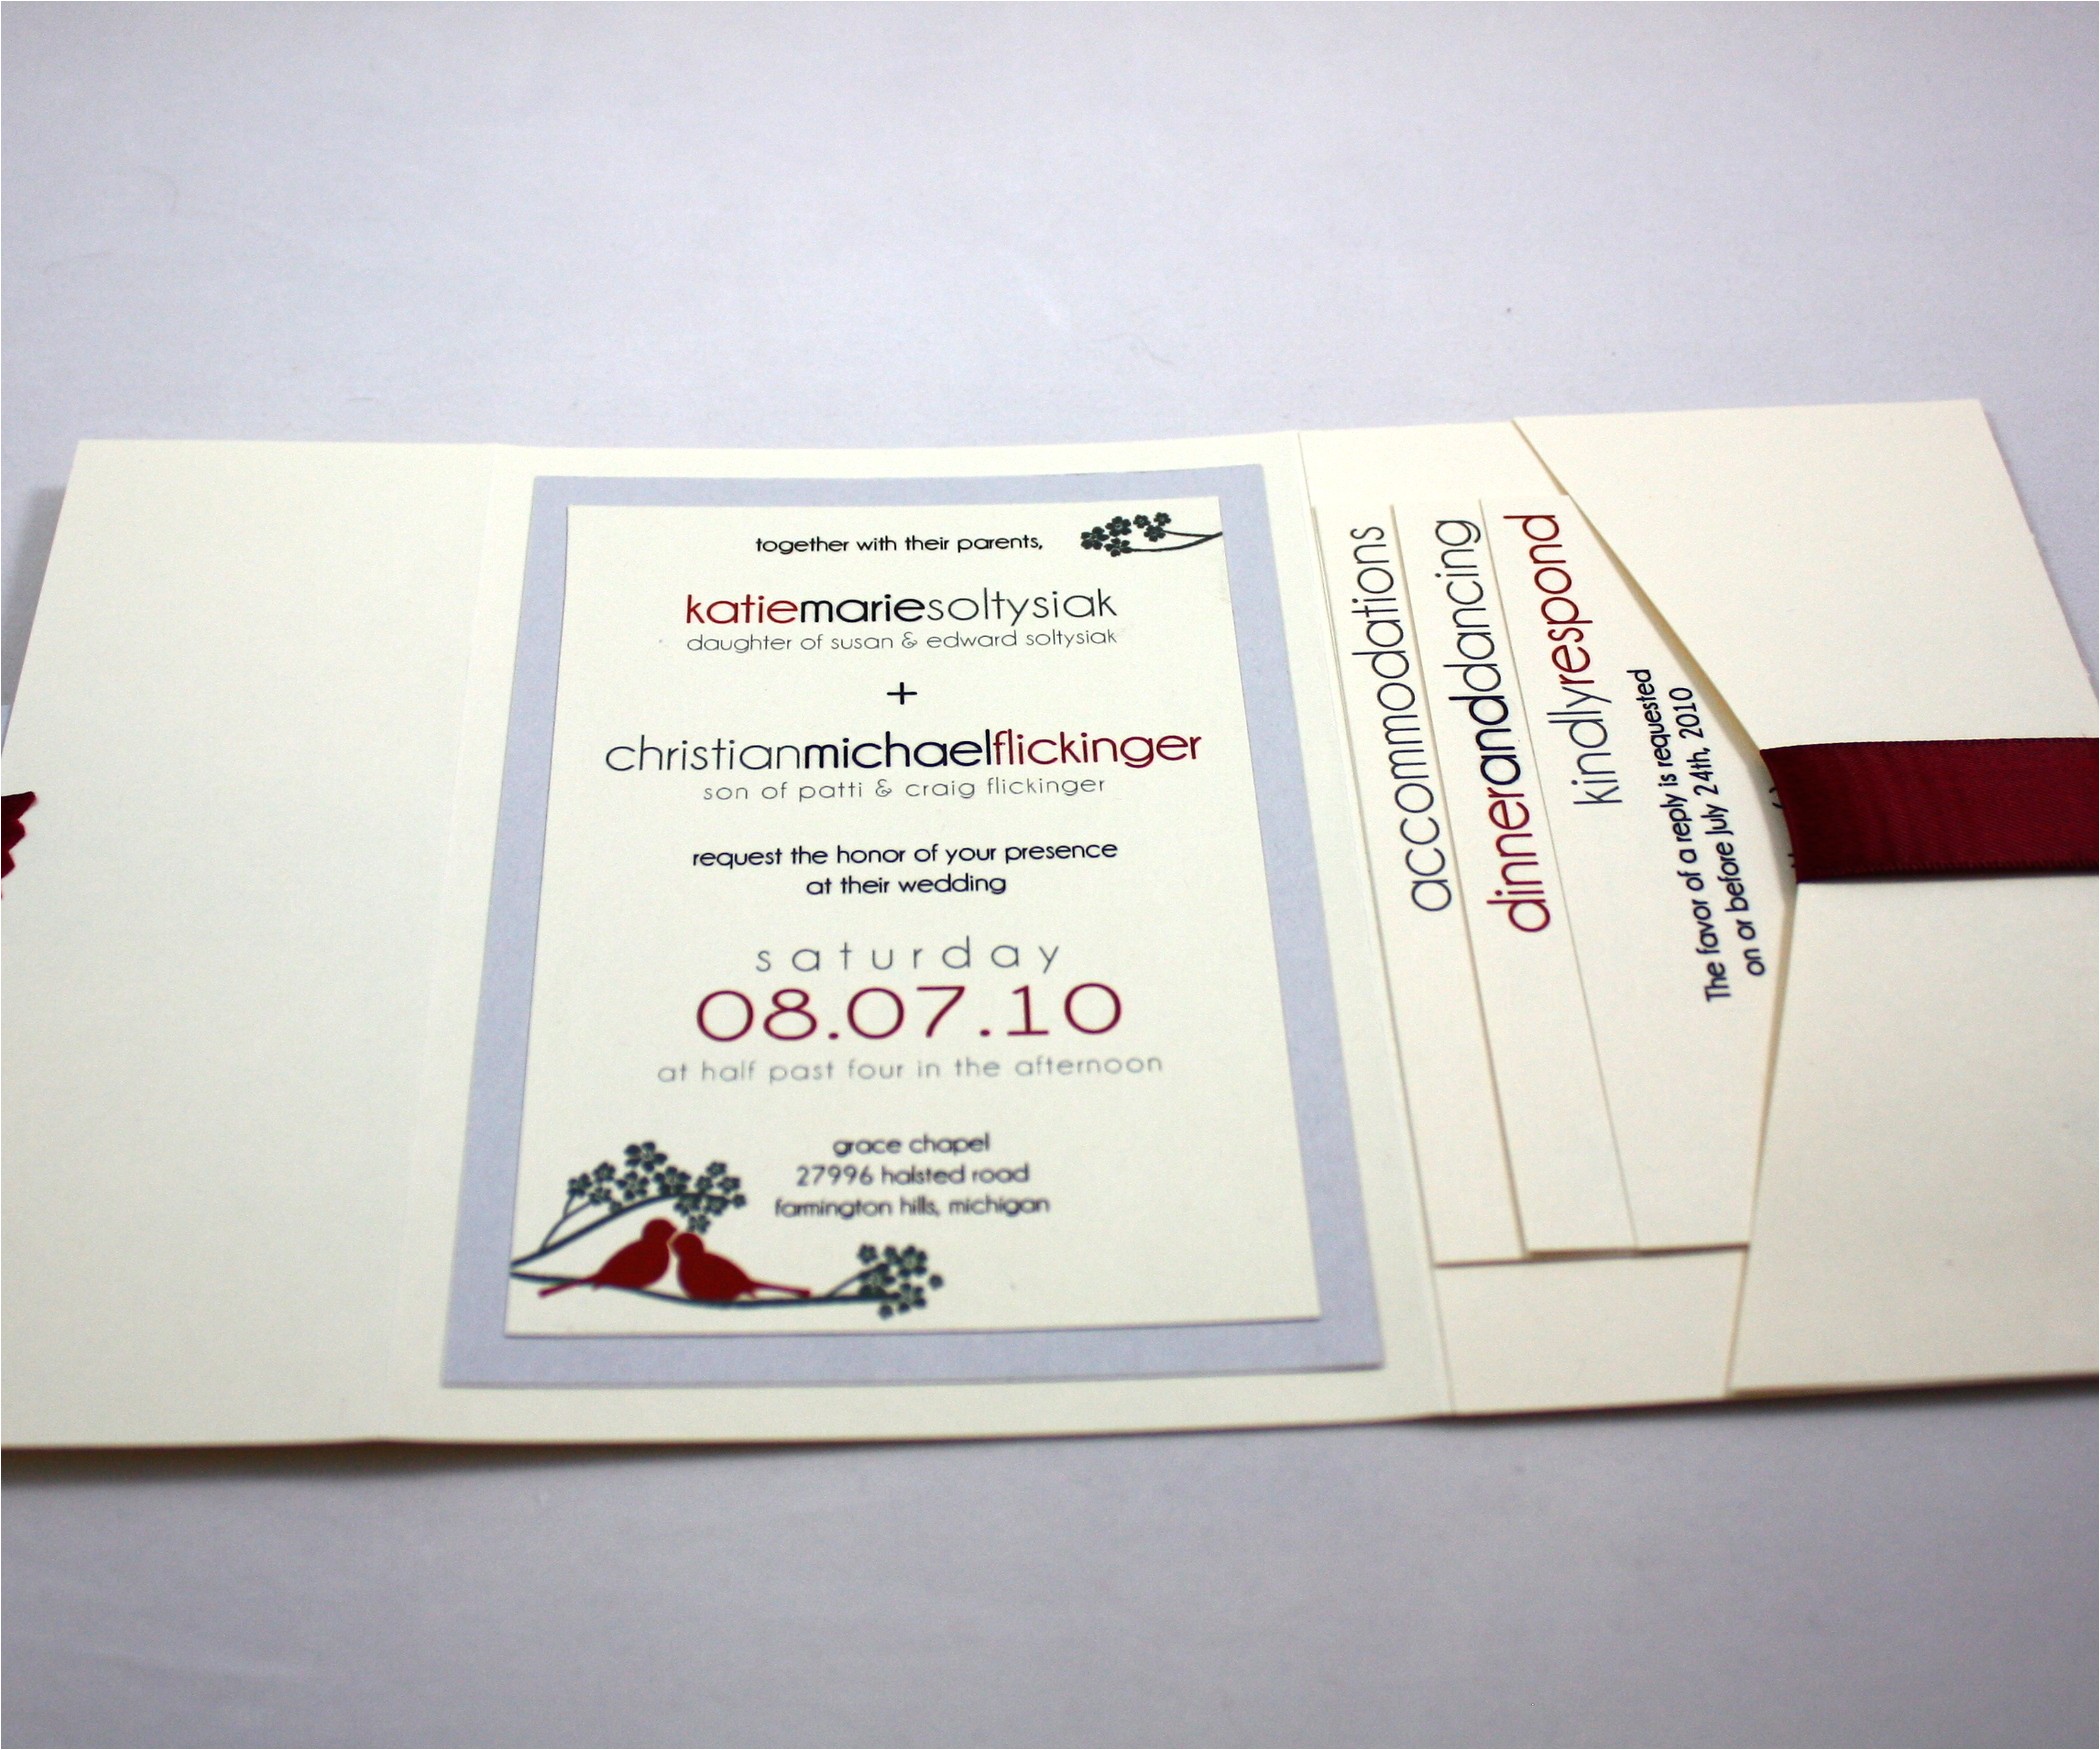 staples wedding invitation kits wedding invitation cards staples new wedding